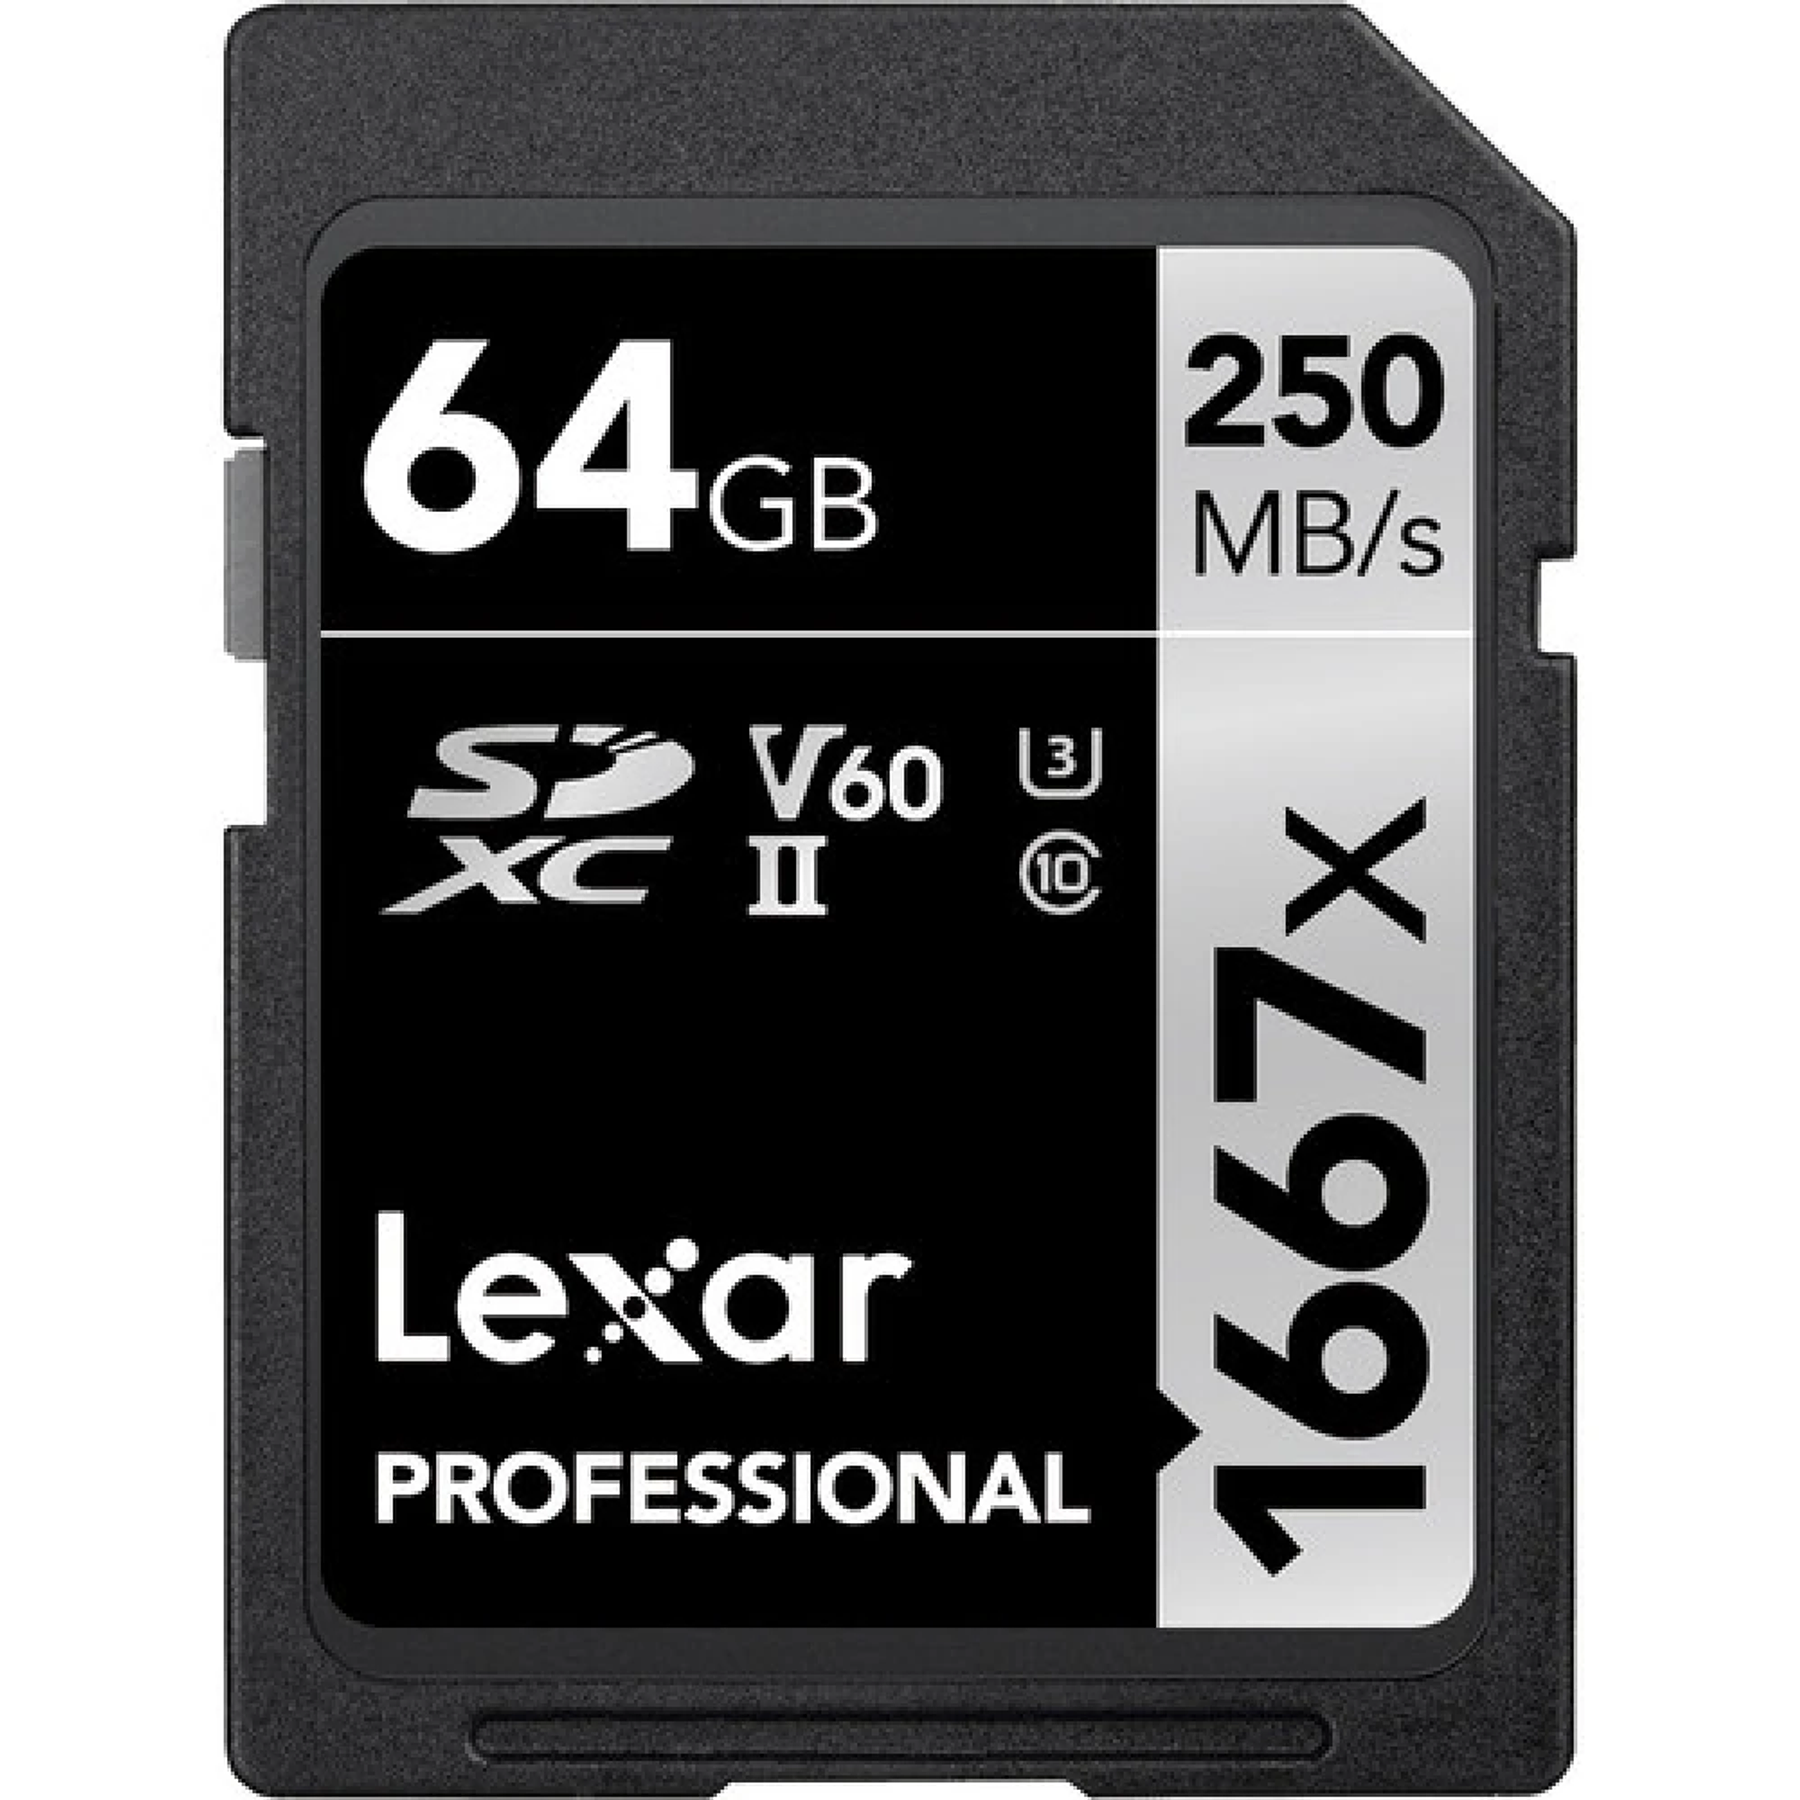 Lexar 64GB PROFESSIONAL 1667X 250MB/S SDXC UHS-II